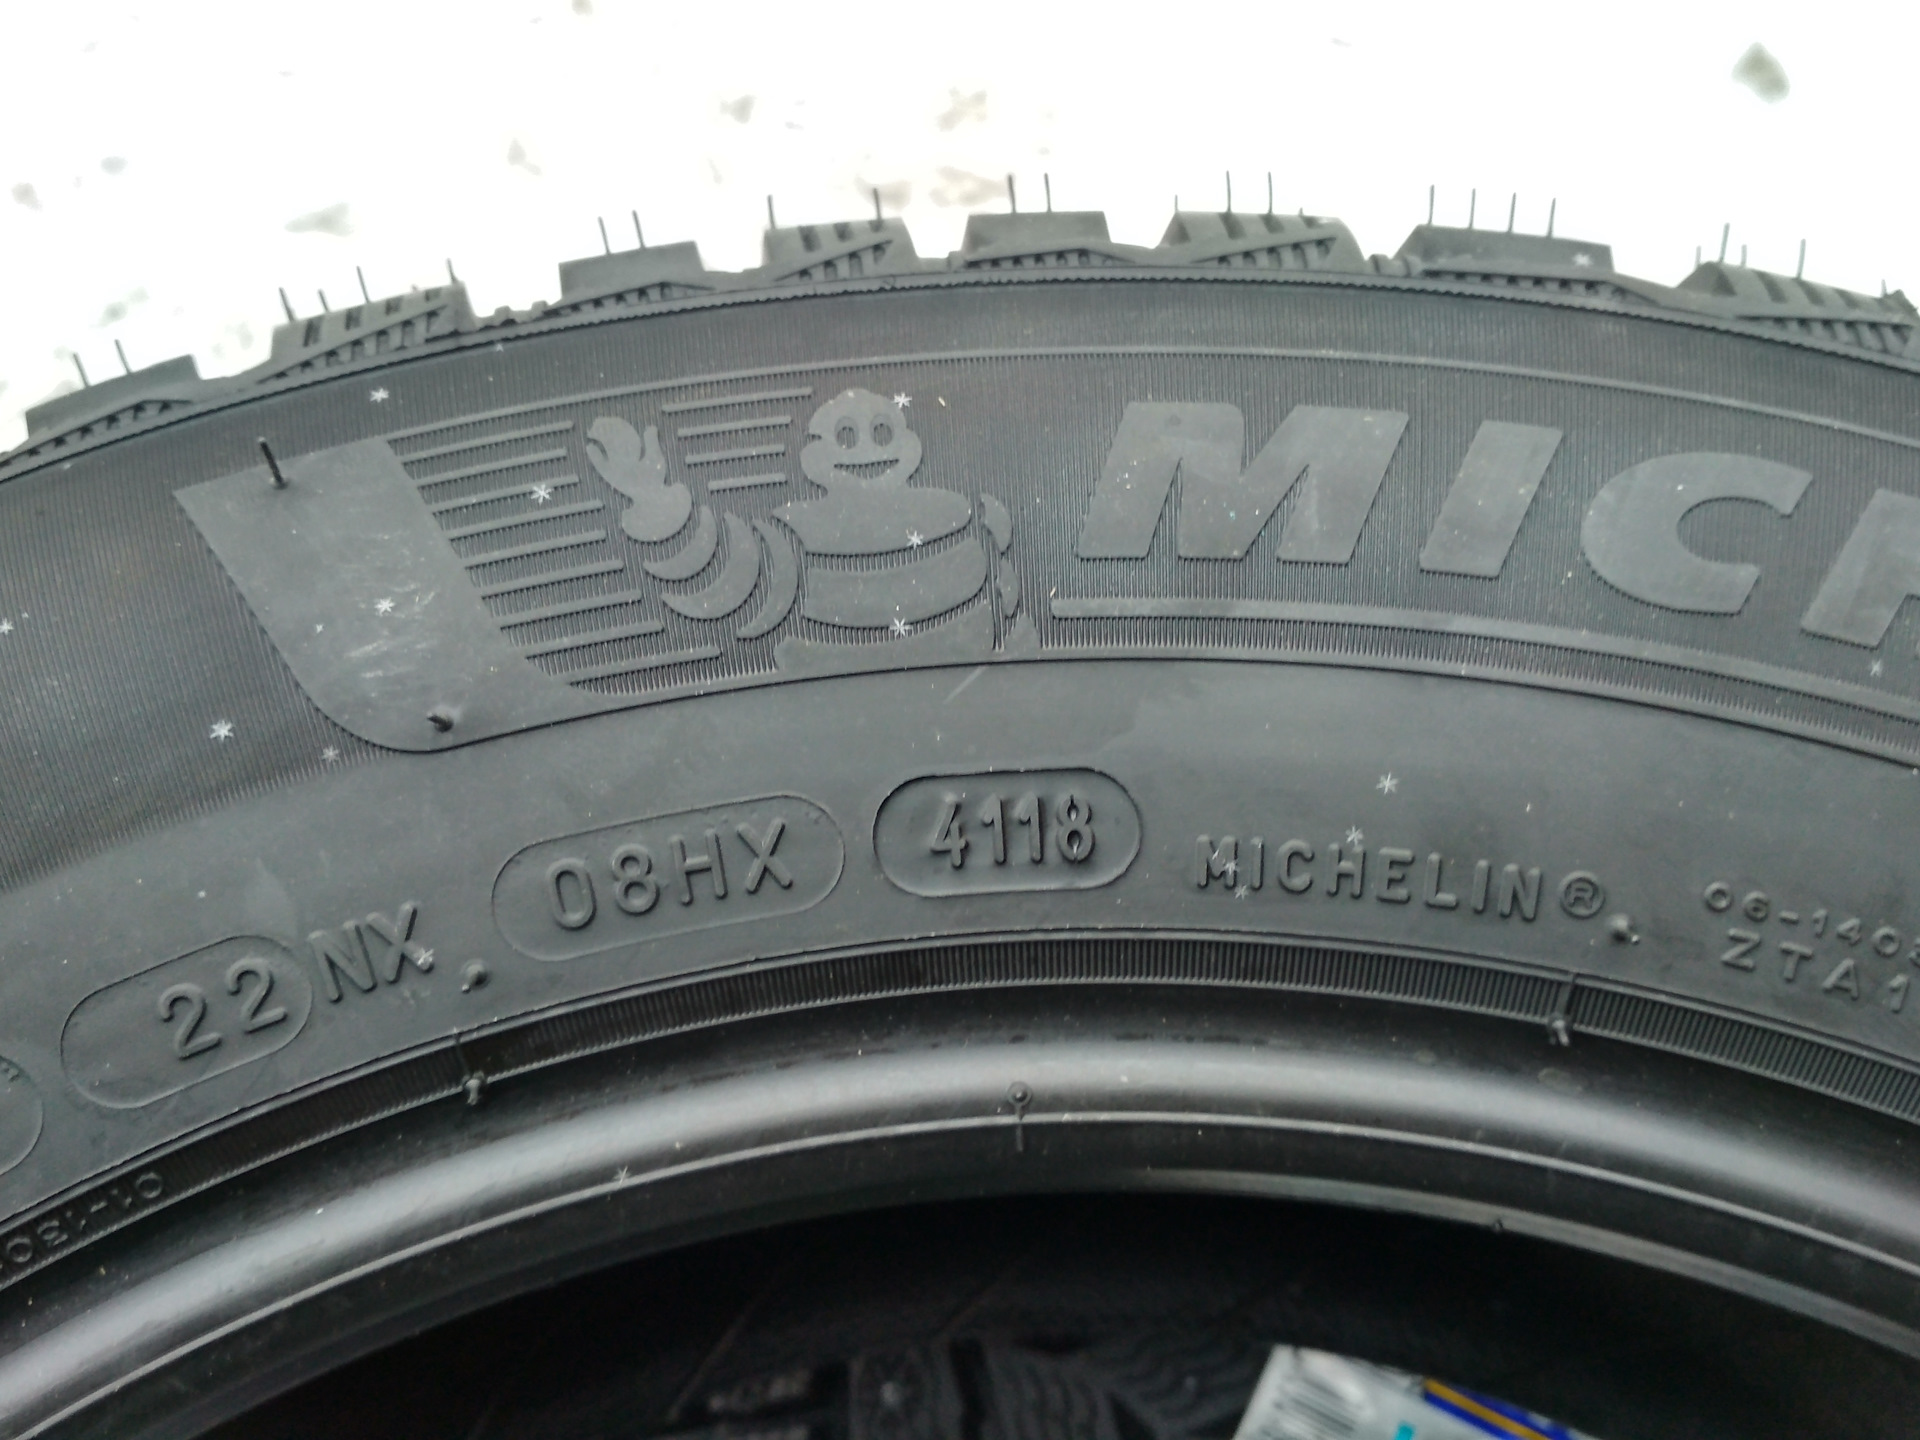 Где на шинах год выпуска фото. Шины Мишлен Дата изготовления шин. Дата производства шины Michelin. Дата выпуска на шинах Мишлен. Шины Дата производства michelin08xx.